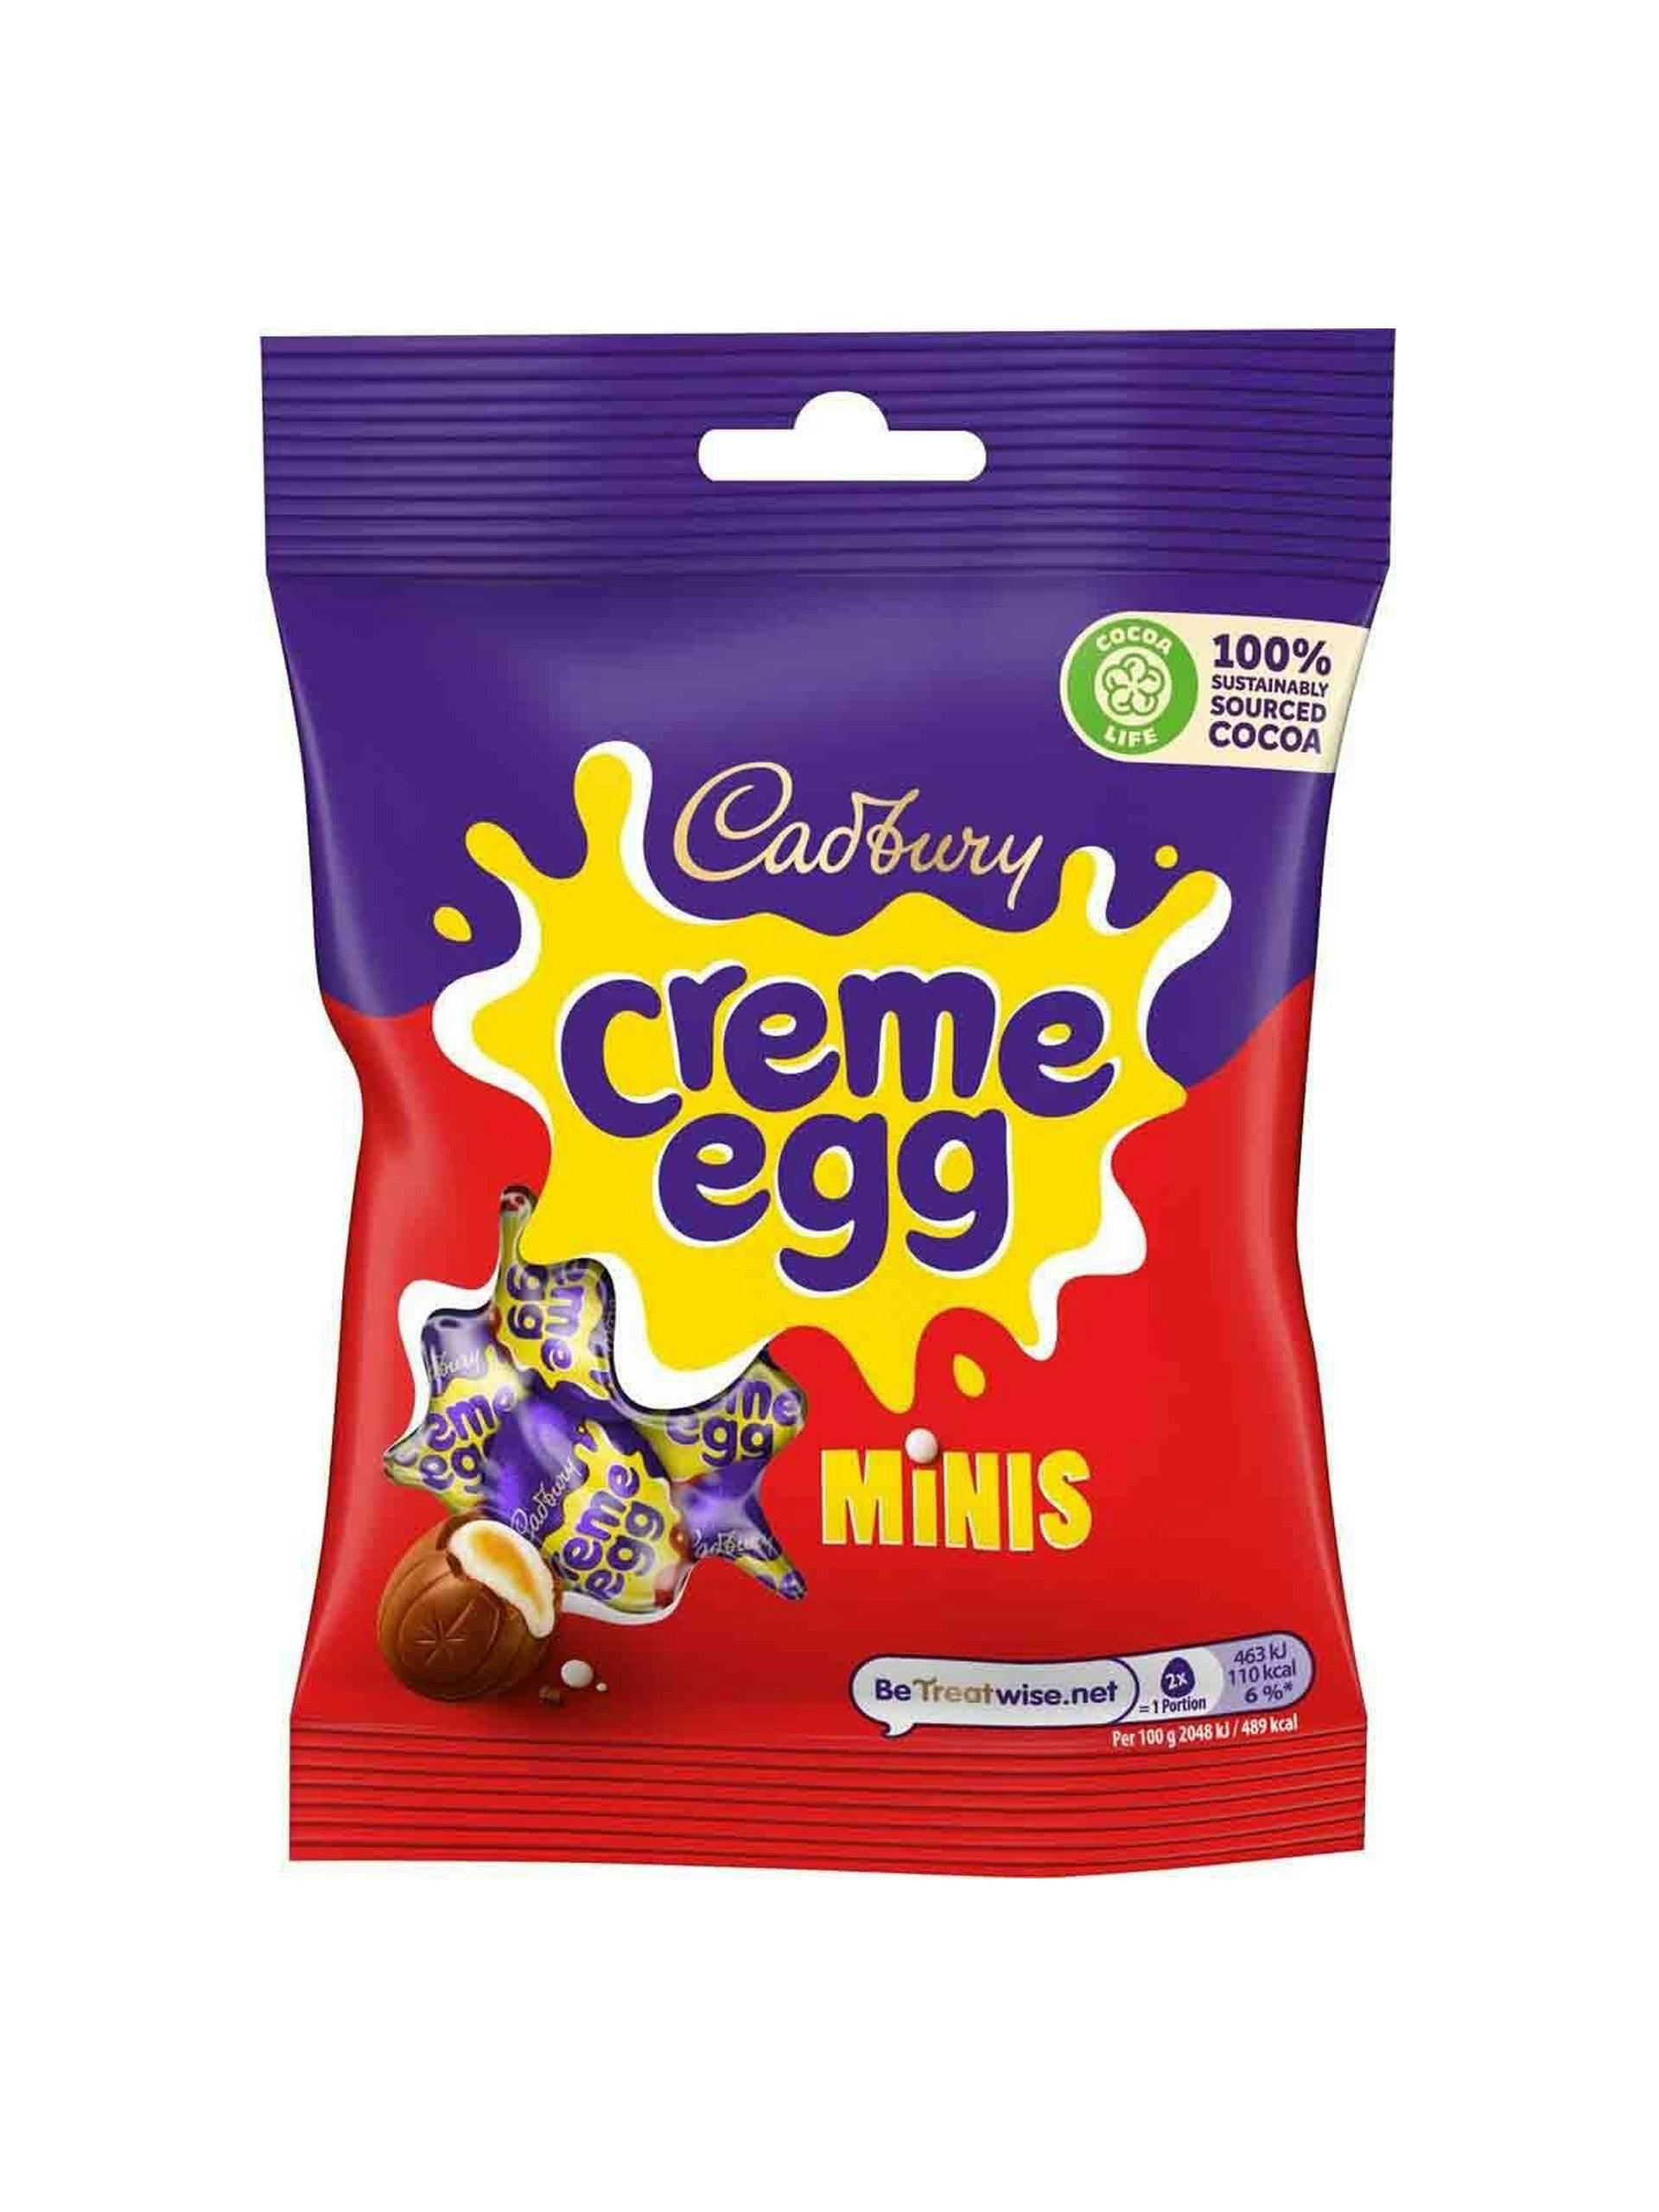 Mini Creme egg chocolates